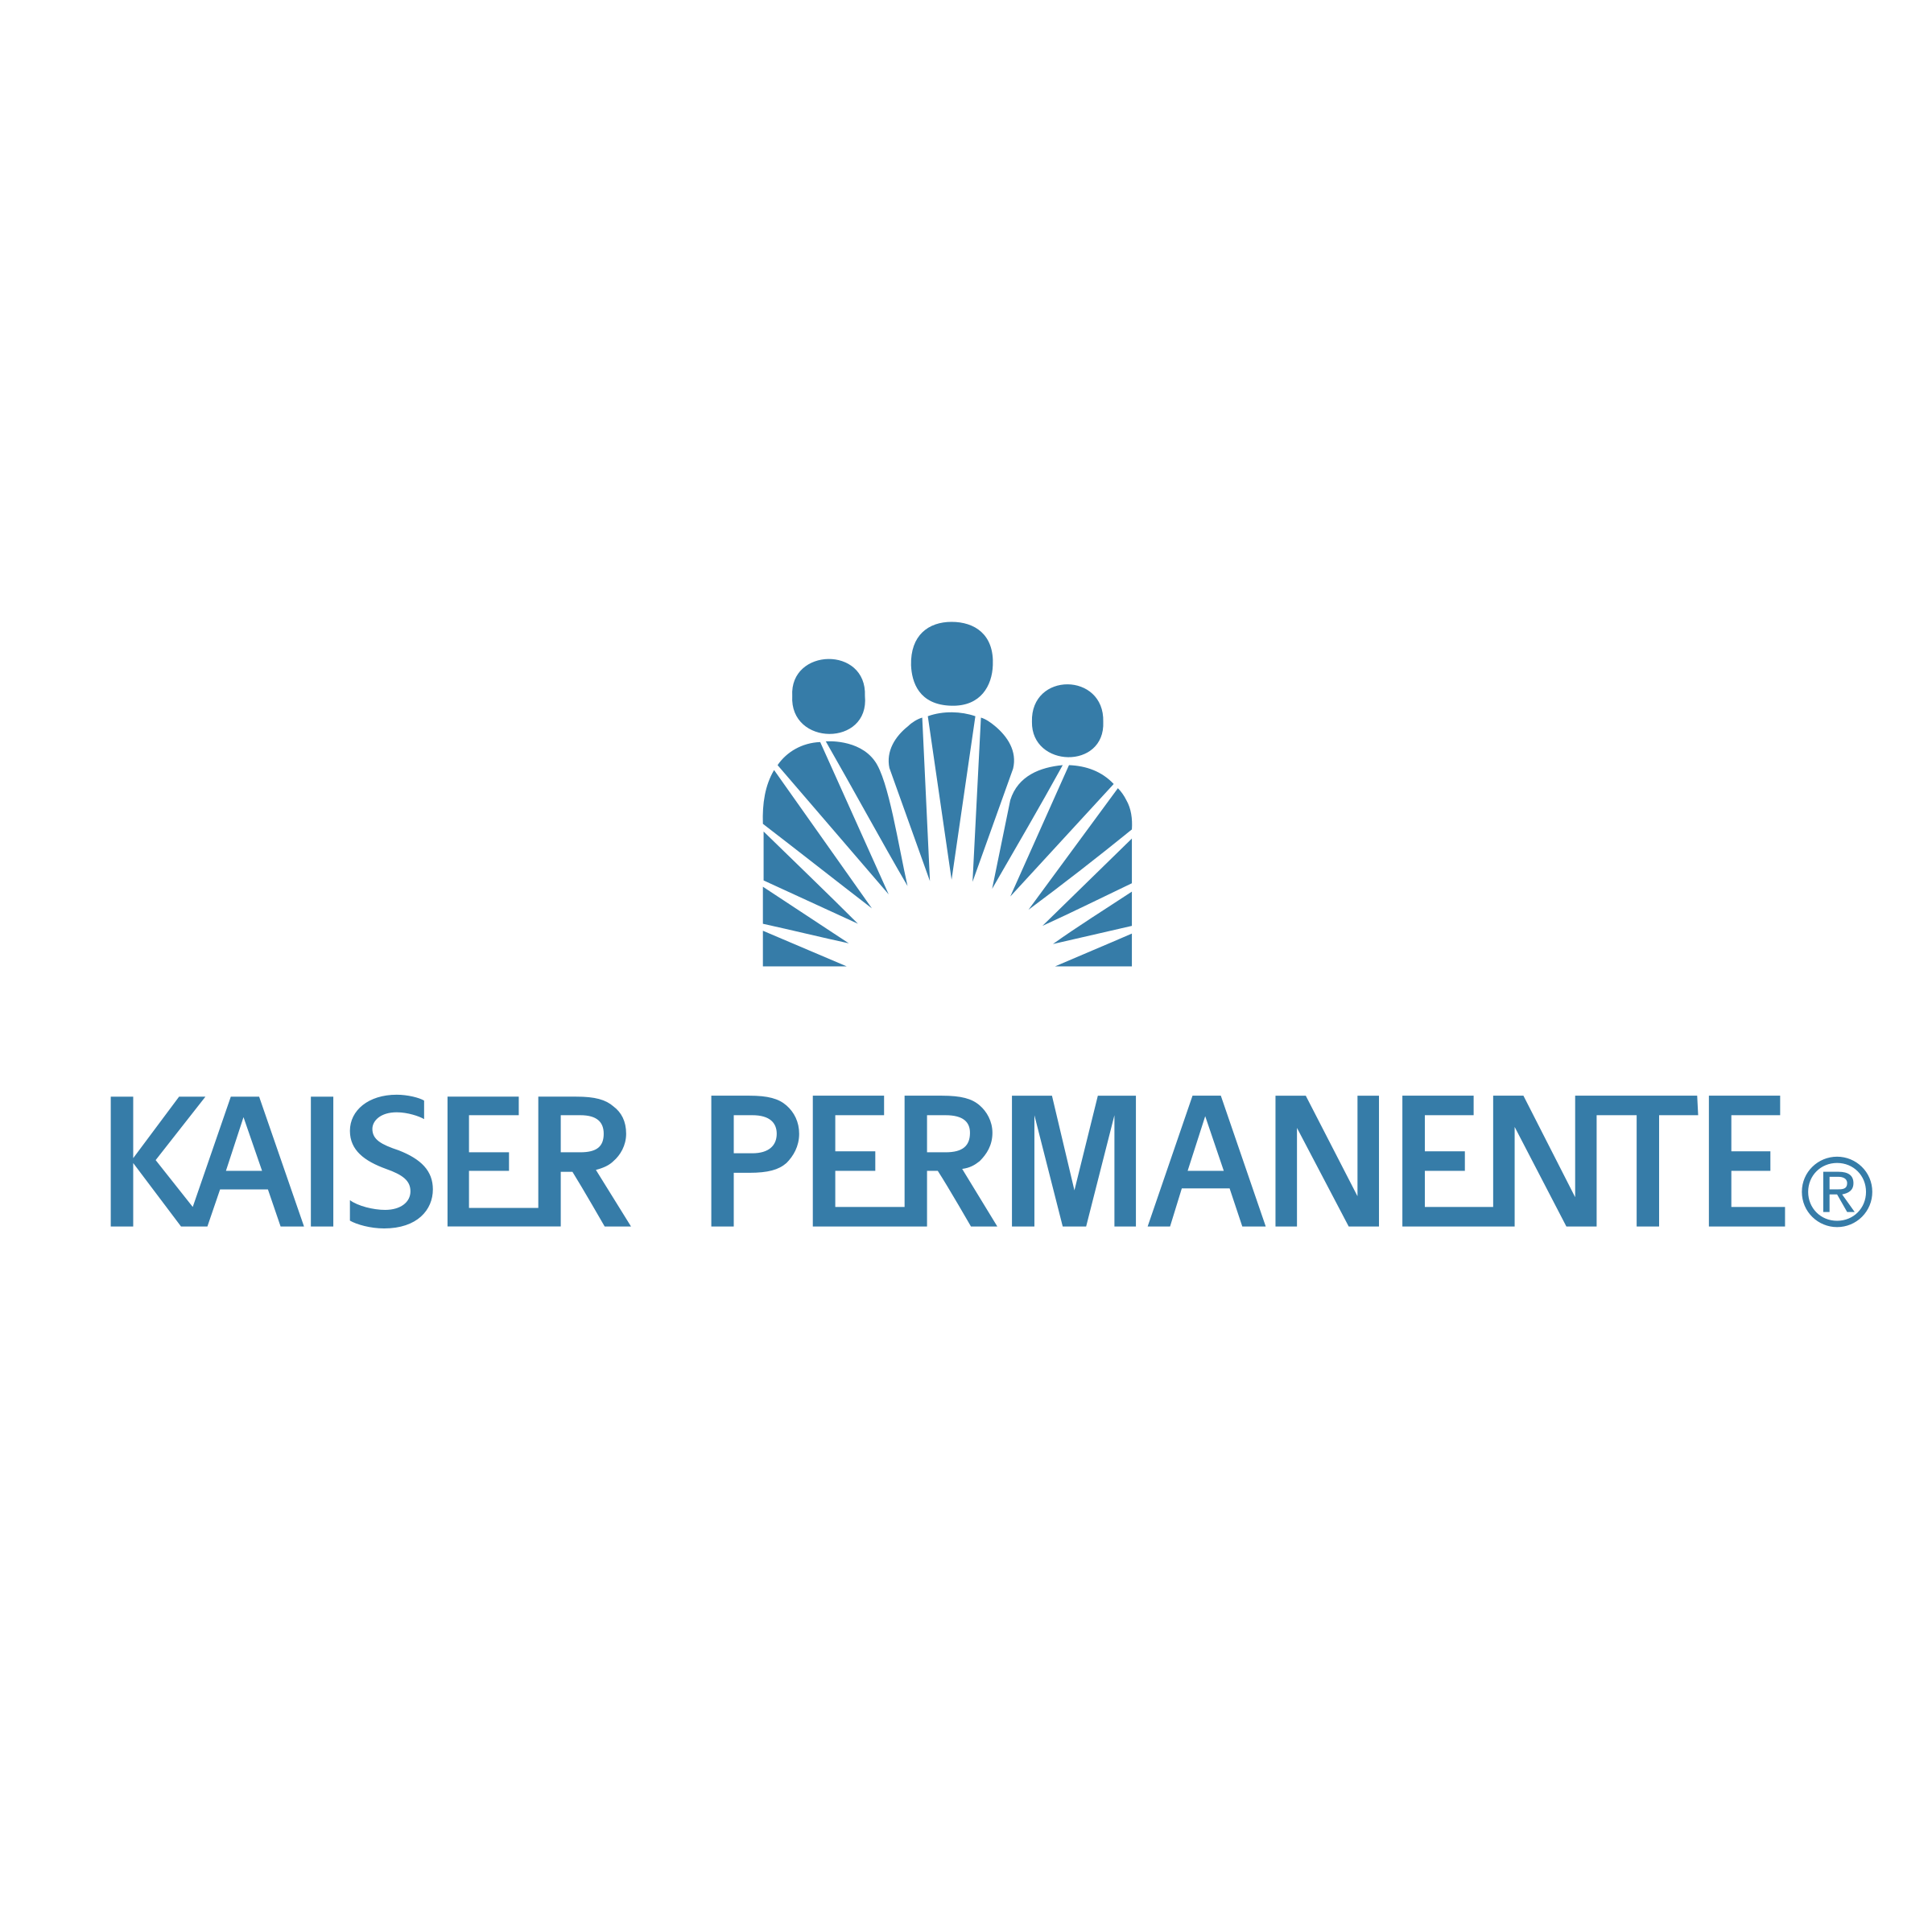 Kaiser permanente company phone number caresource marketplace penile implant